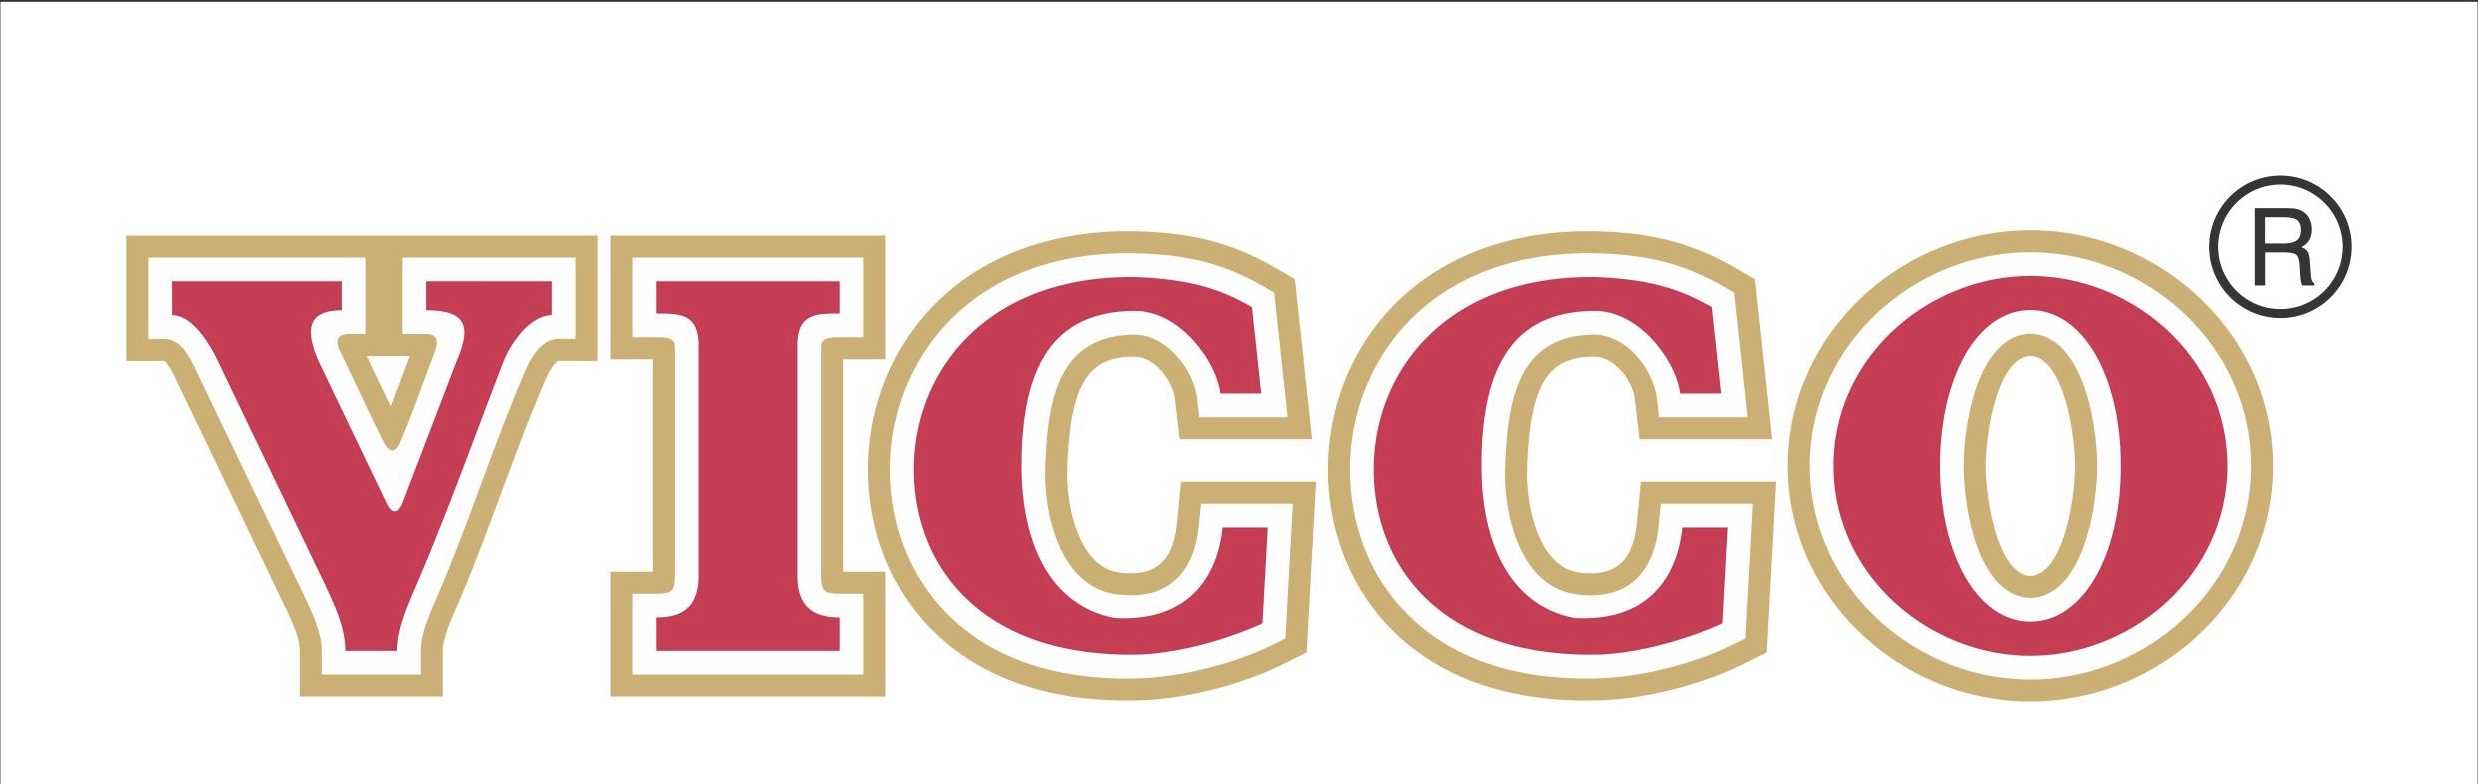 vicco-logo